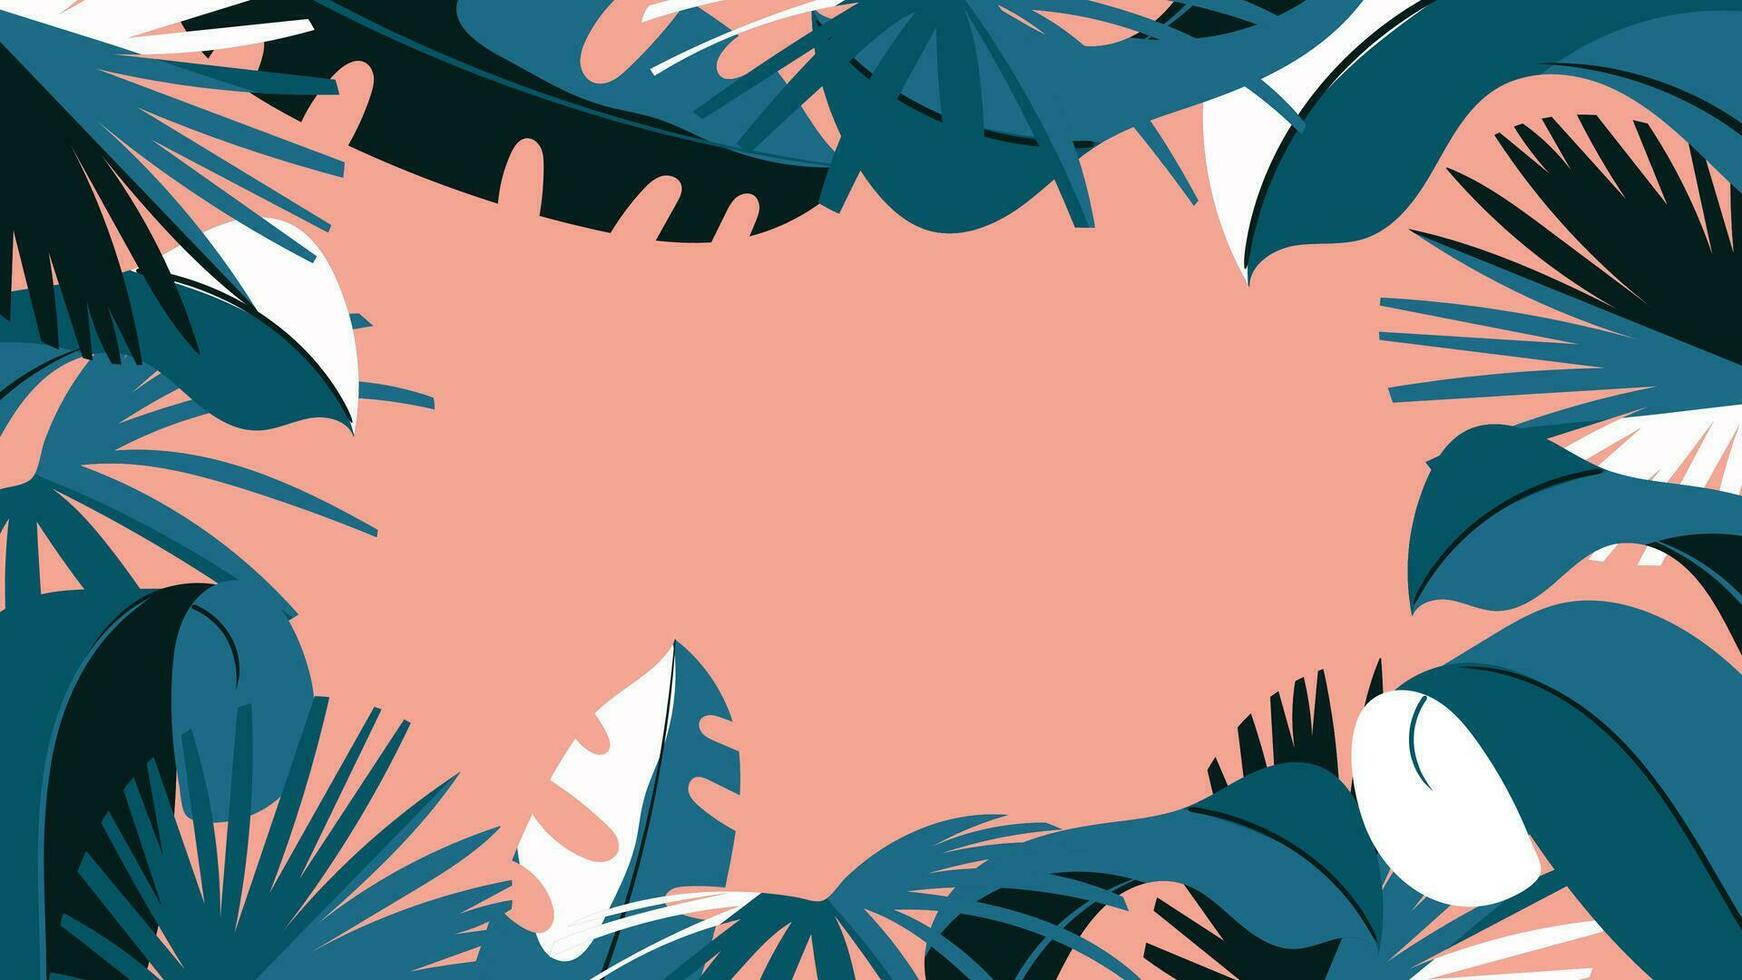 skog tropisk bakgrund vektor illustration. djungel växter, monstera, handflatan löv, banan blad, exotisk sommartid stil. botanisk bakgrund design för dekoration, tapet, produkt presentation.